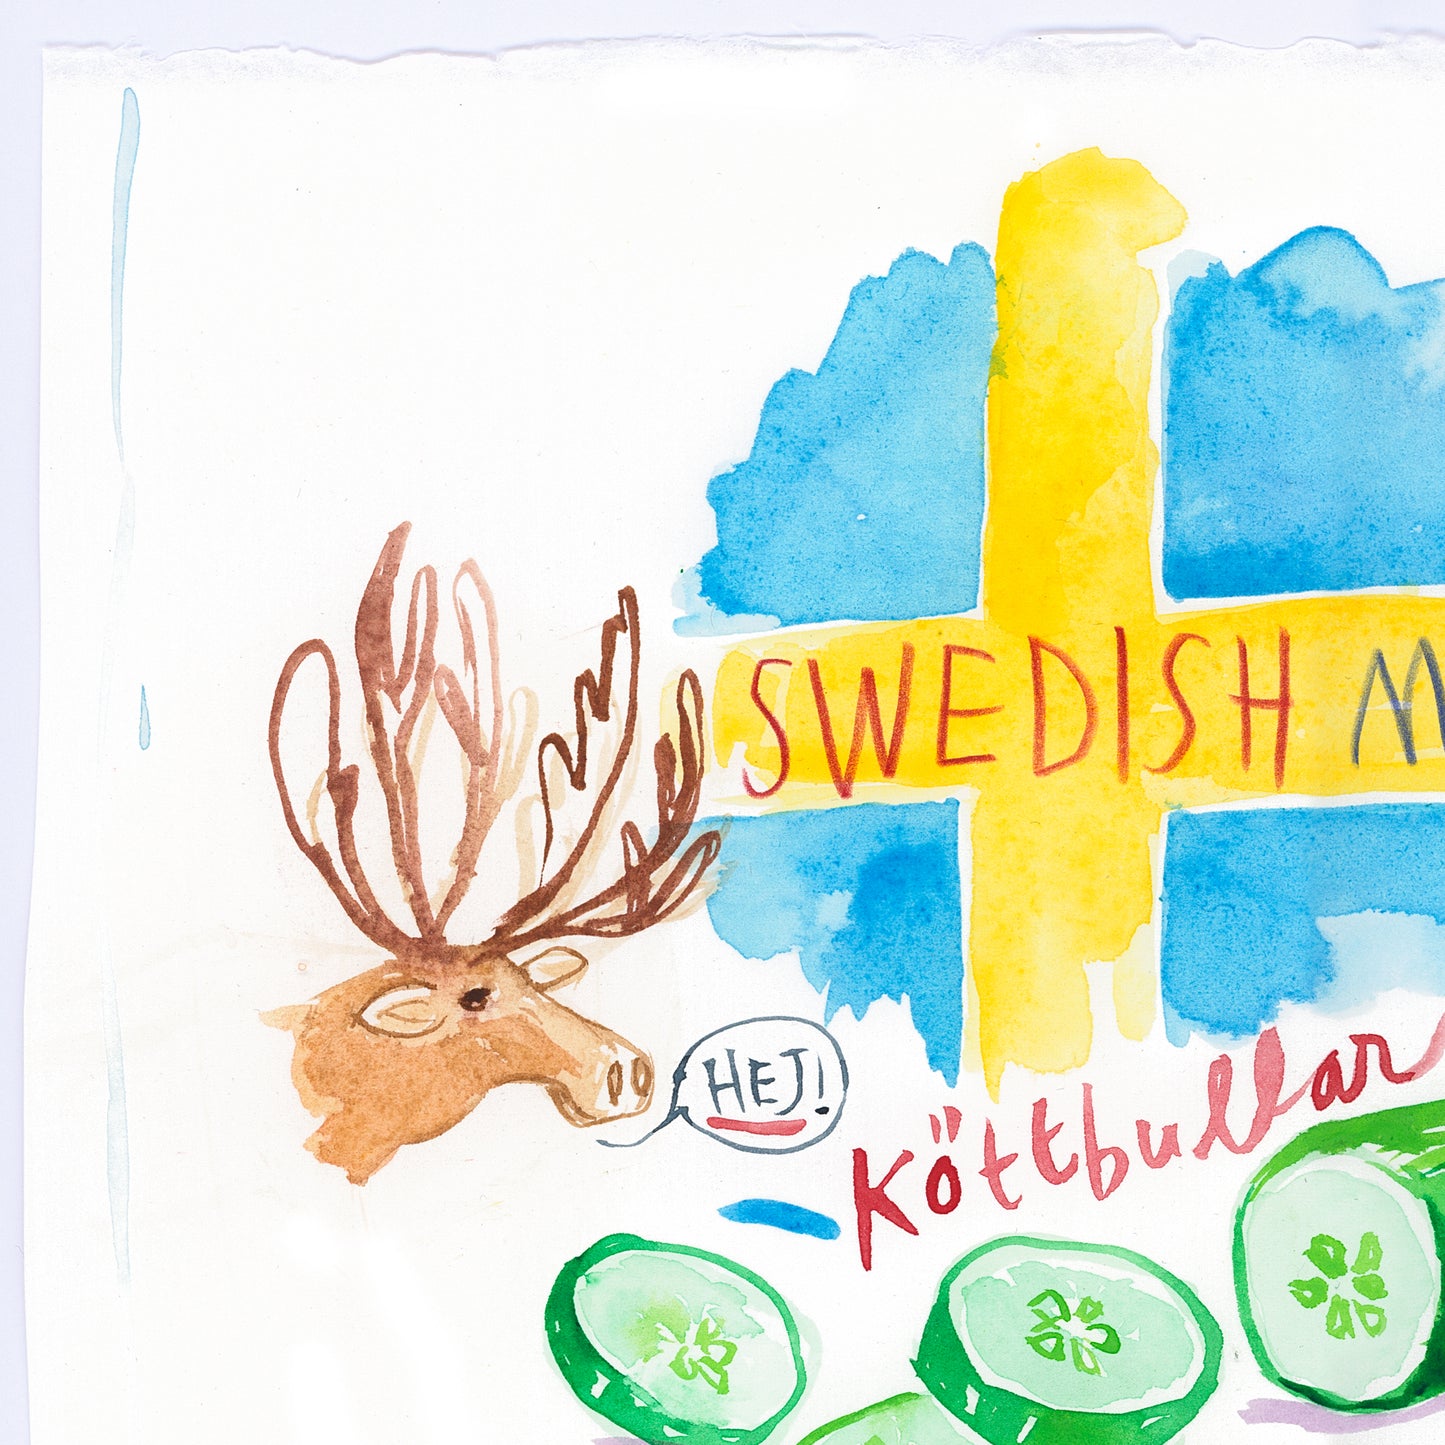 Swedish Meatballs recipe. Original watercolor painting